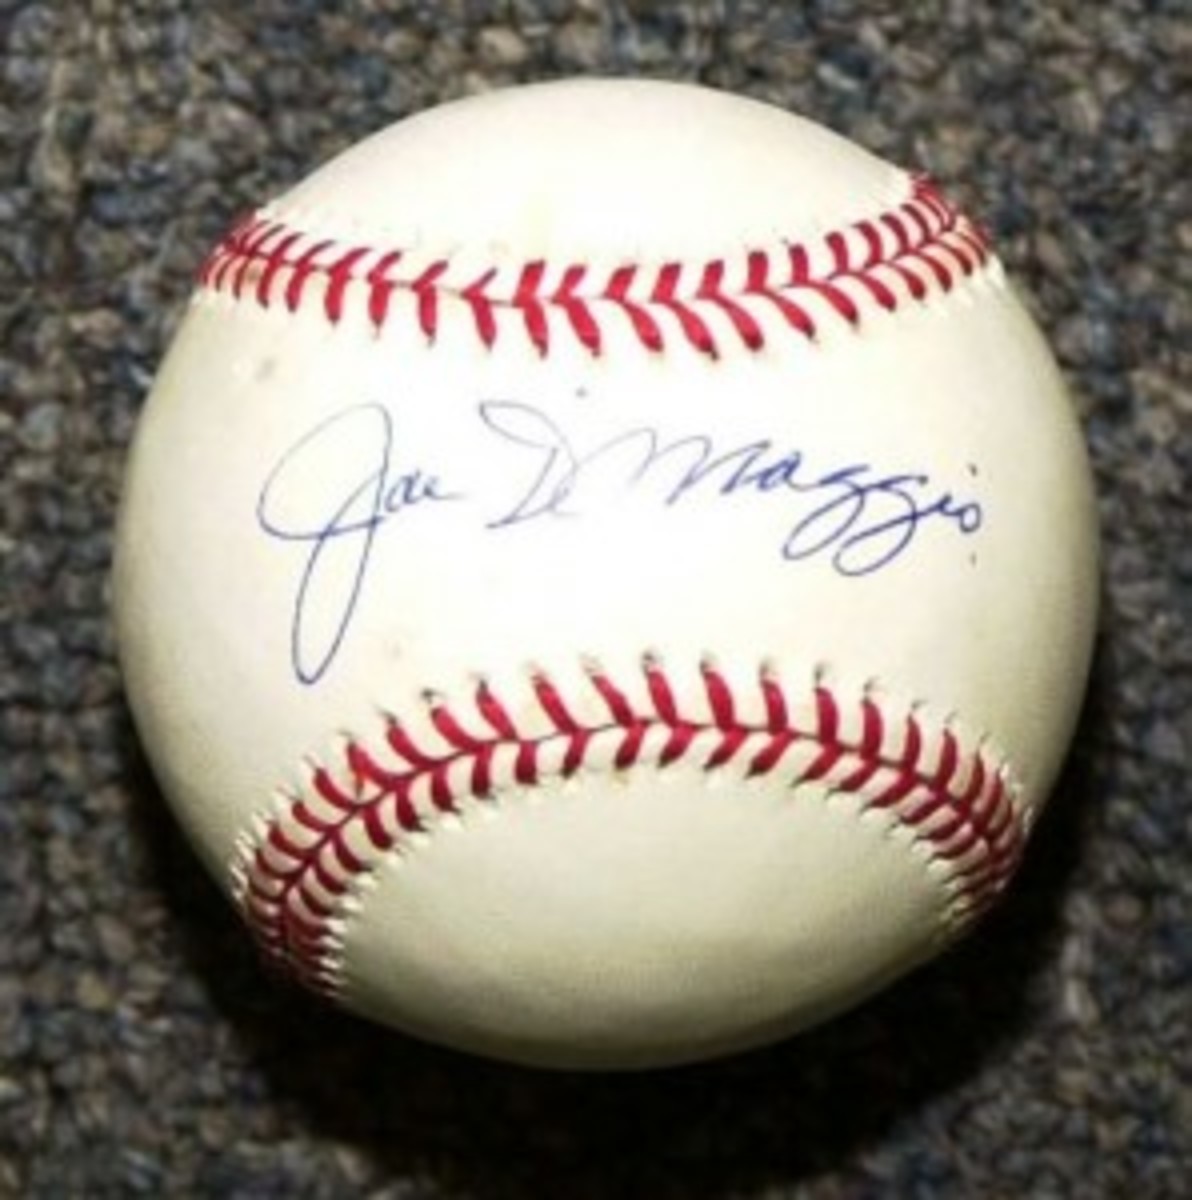 A fake Joe DiMaggio-signed baseball.